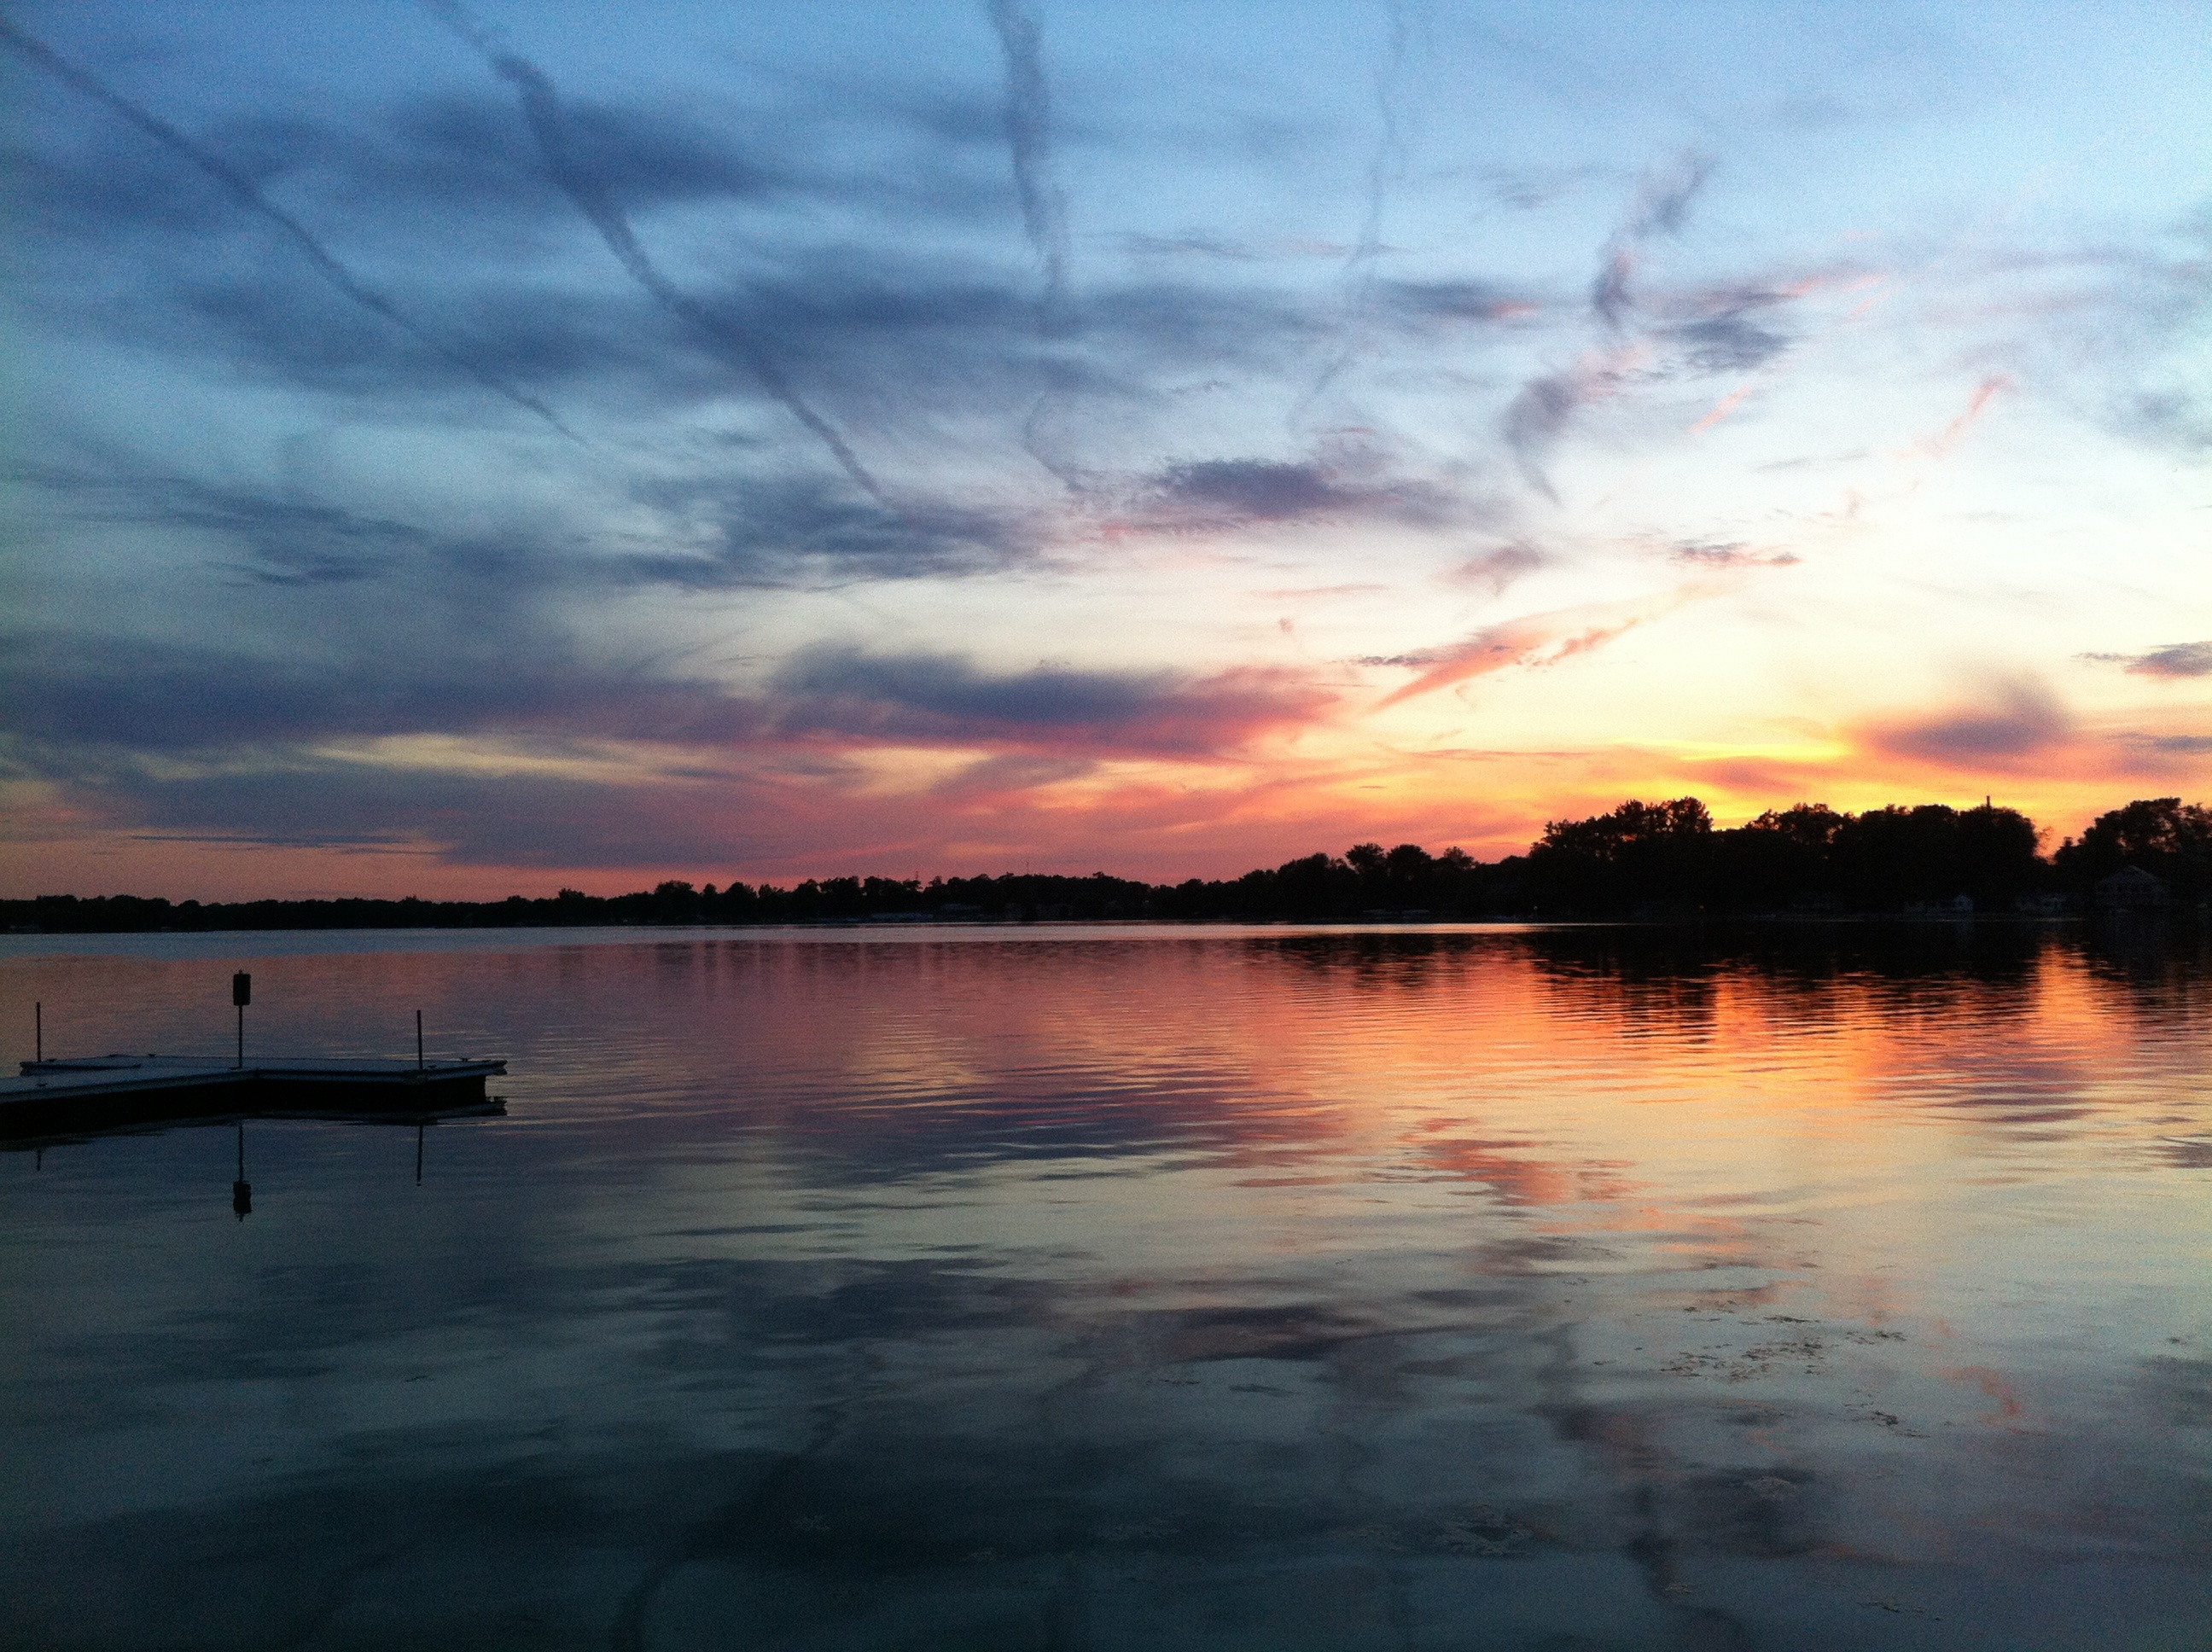 This was taken at Winona Lake in Fall of 2012. Beautiful sunset! Photo taken by Cher Davis.